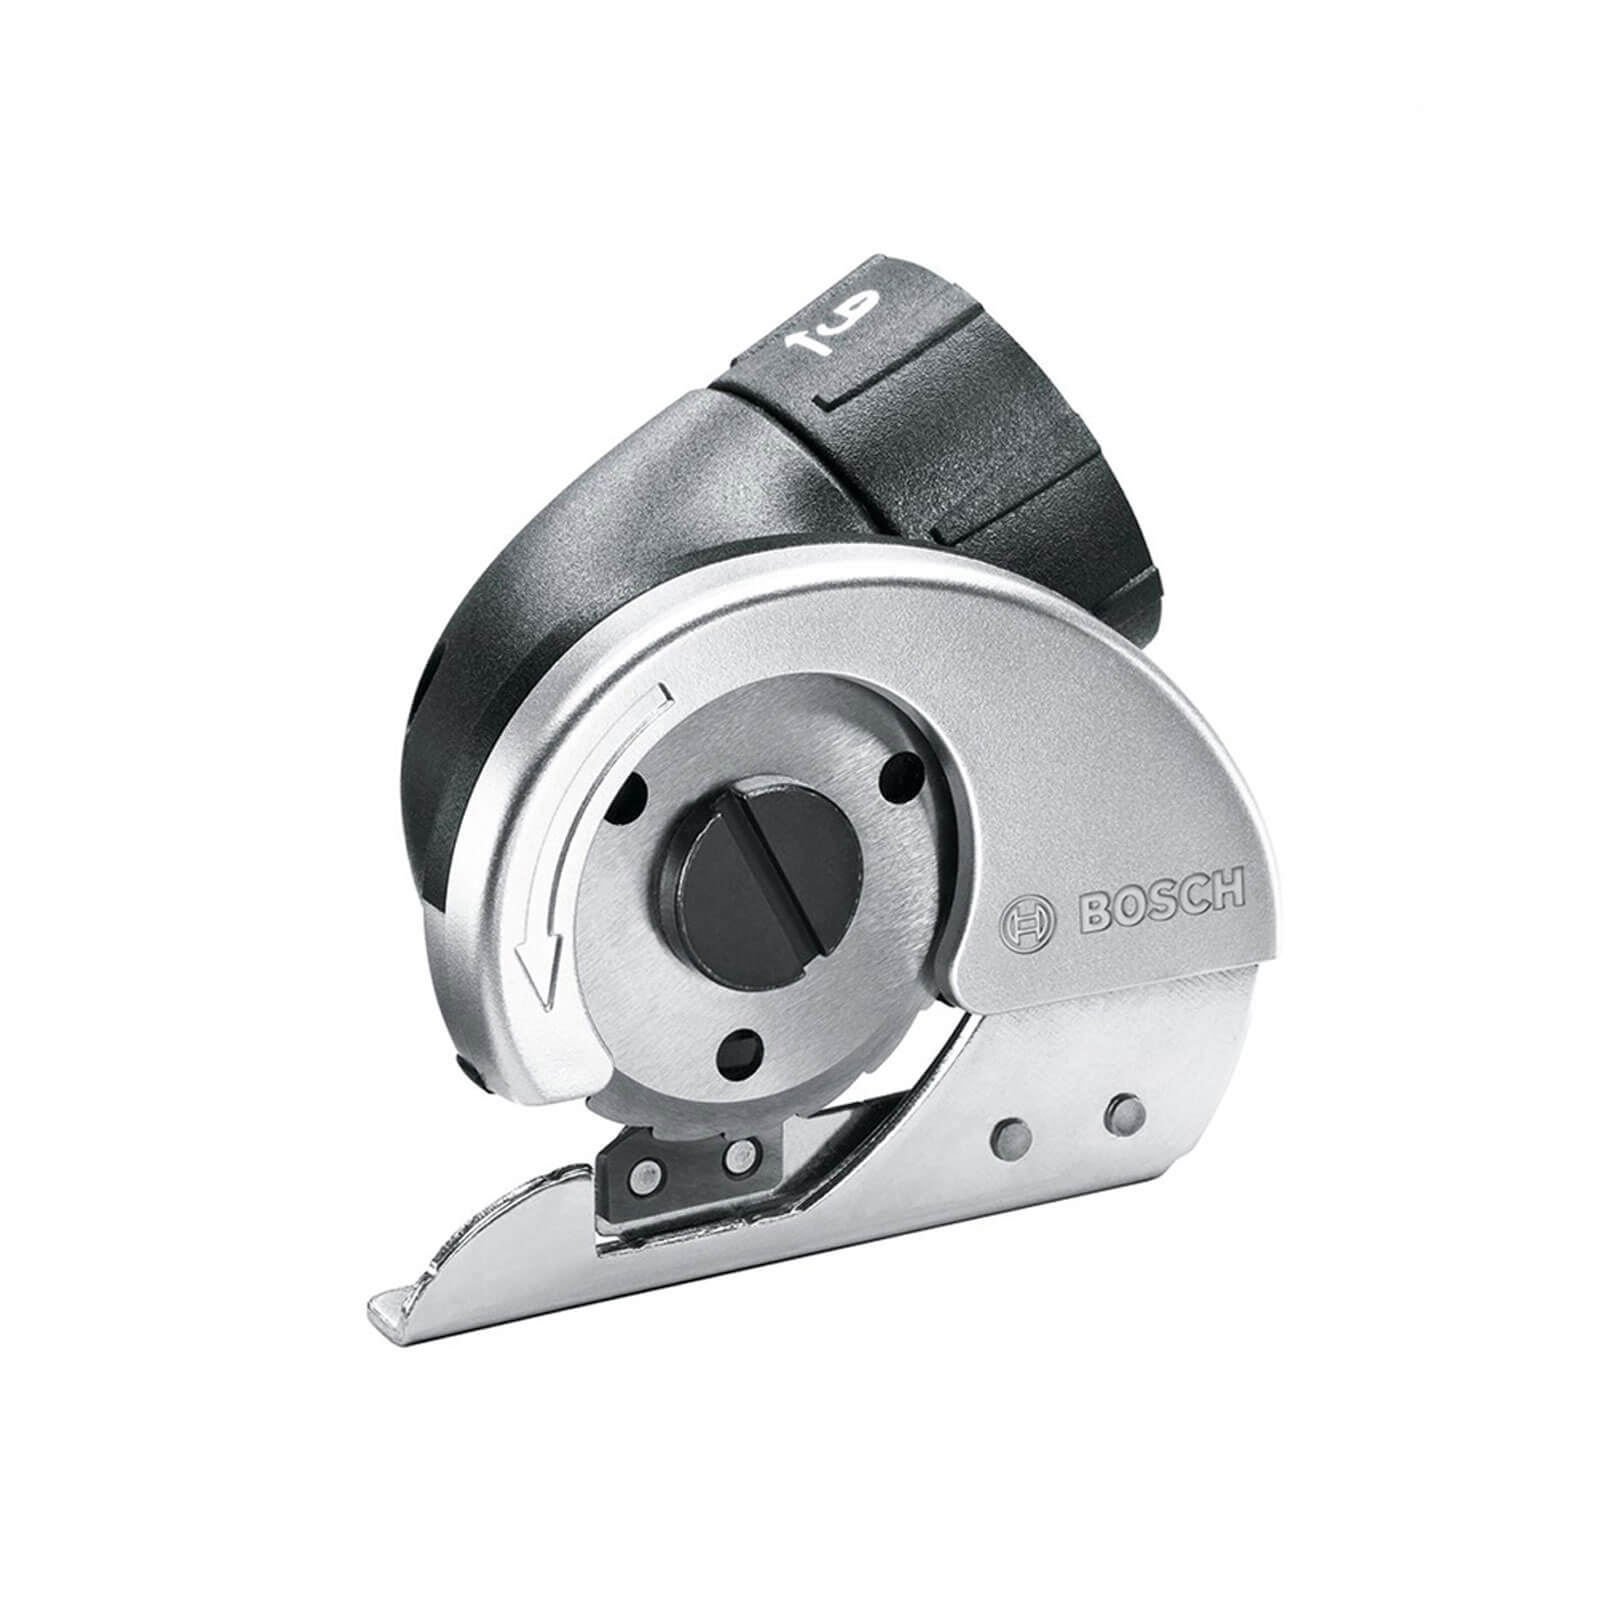 Image of Bosch Cutting Adaptor for IXO Screwdrivers